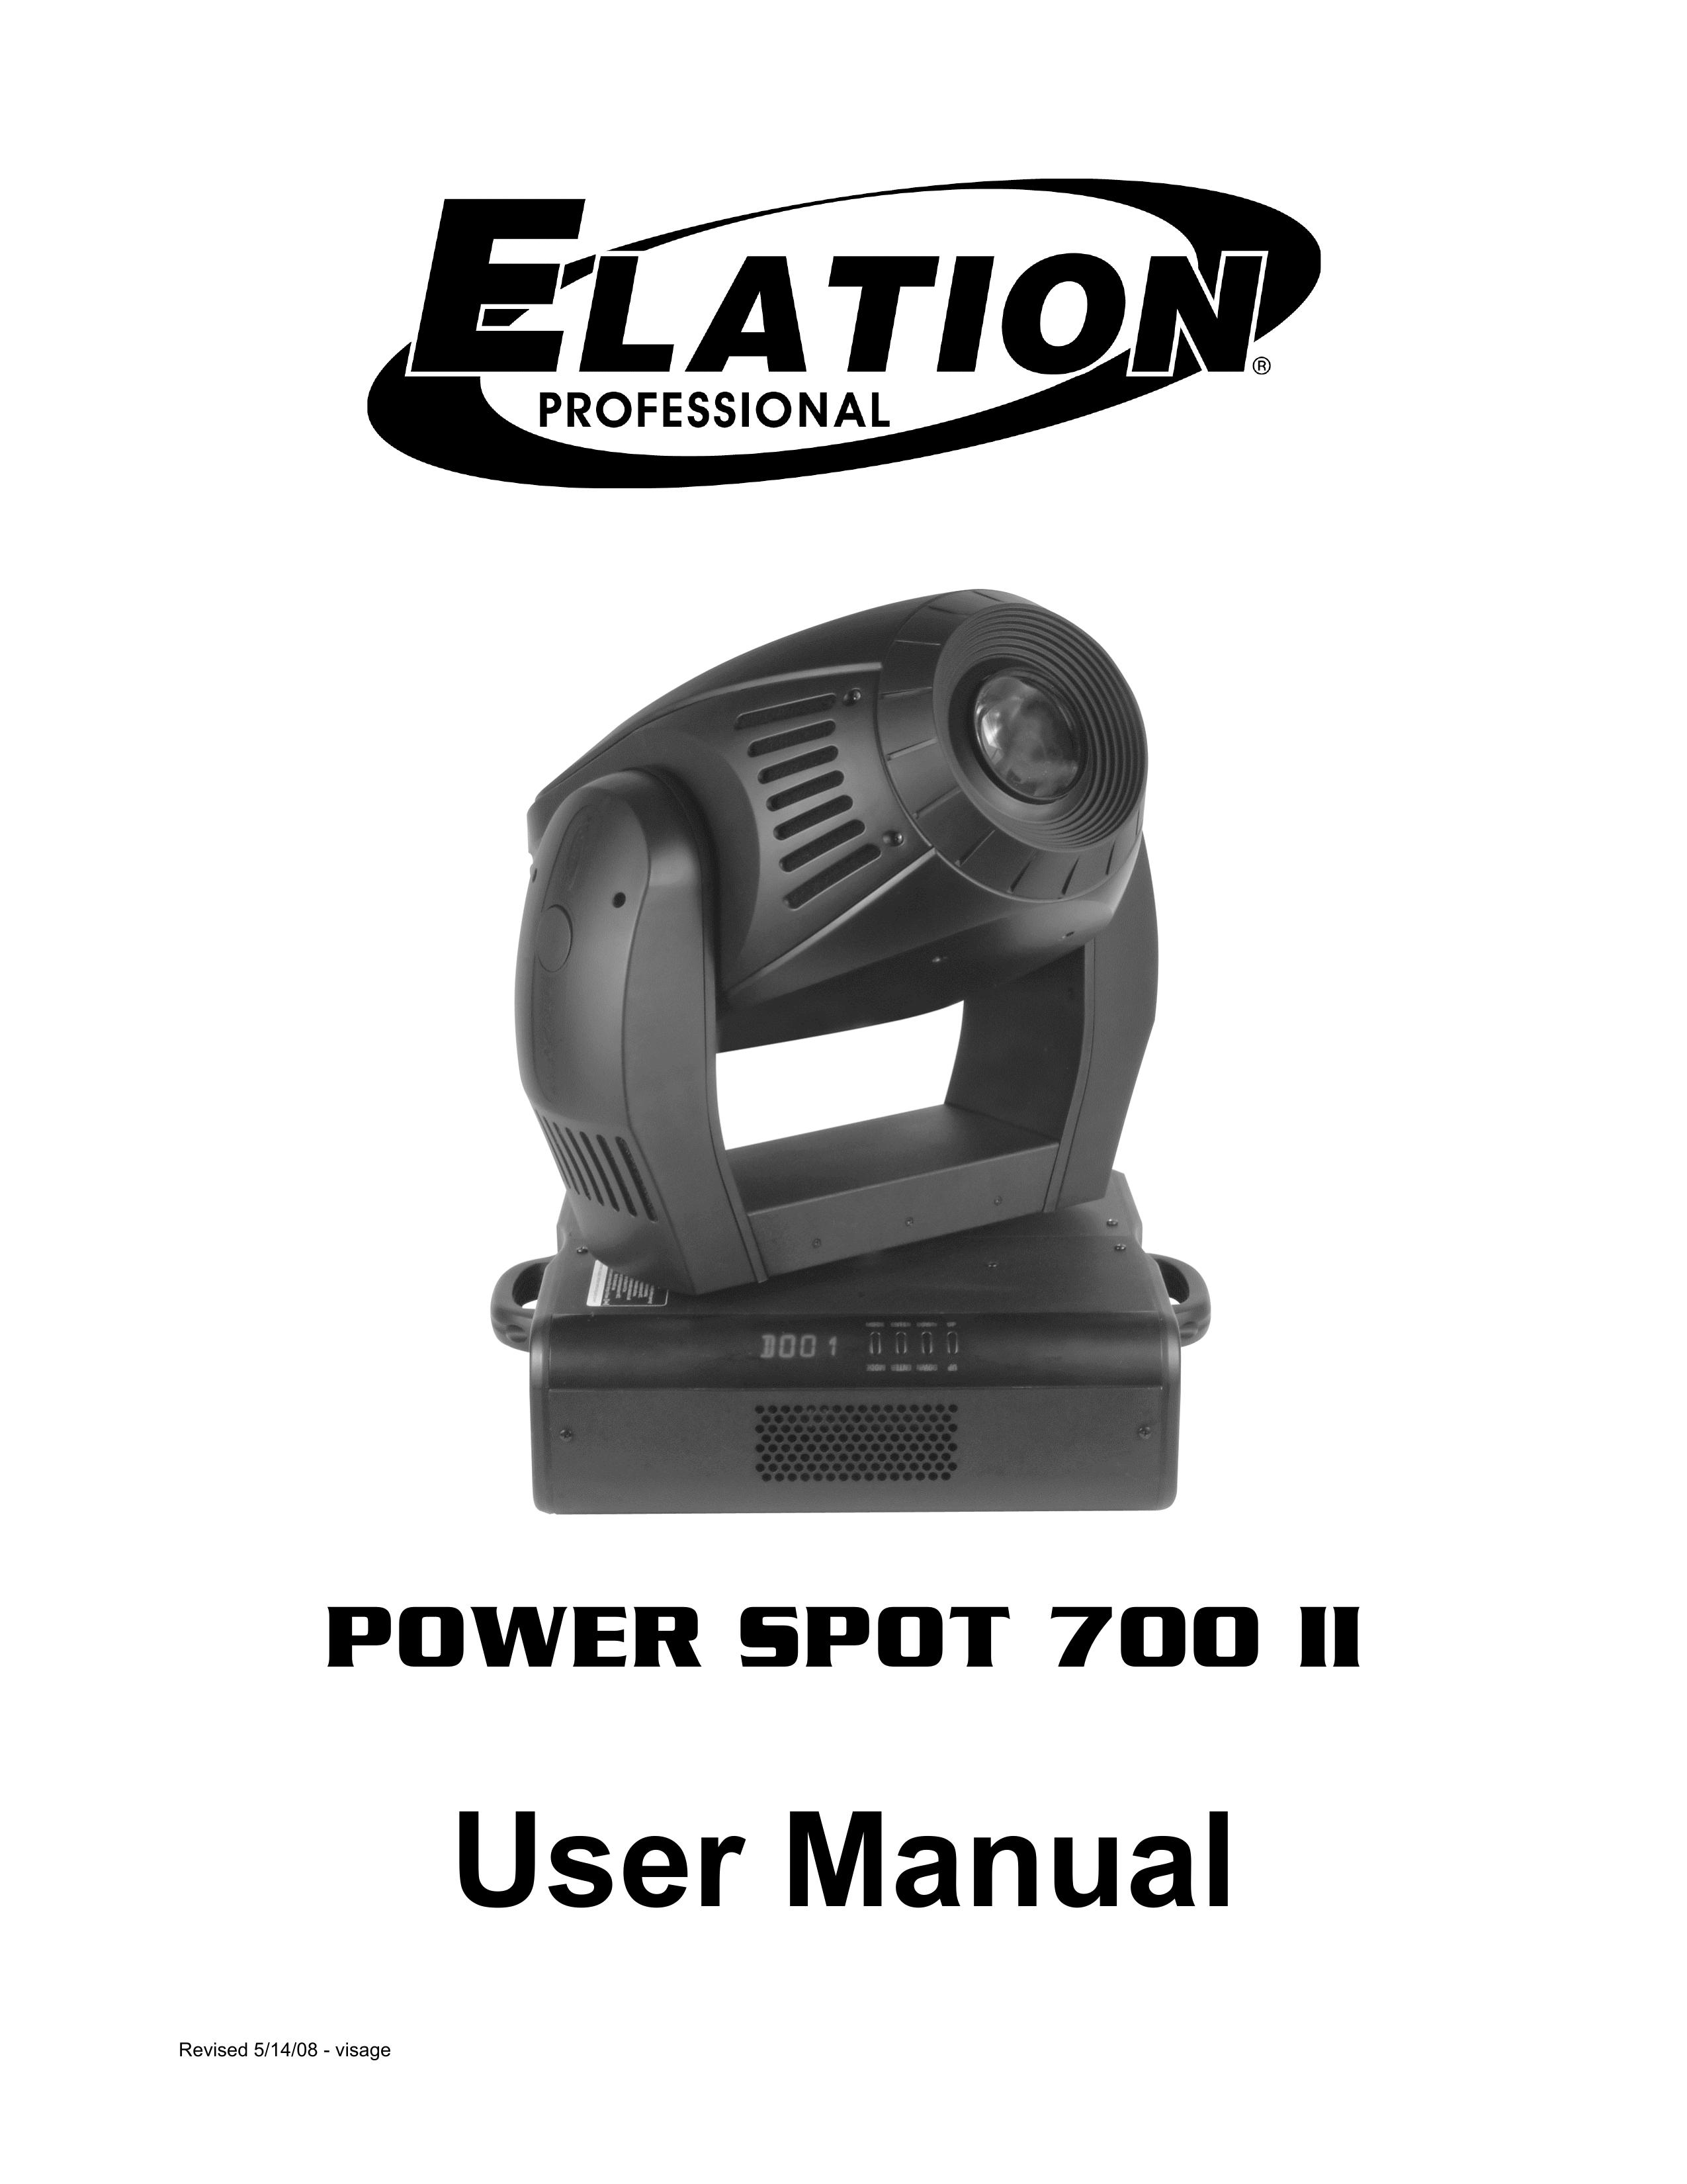 Elation Professional 700 II Security Camera User Manual